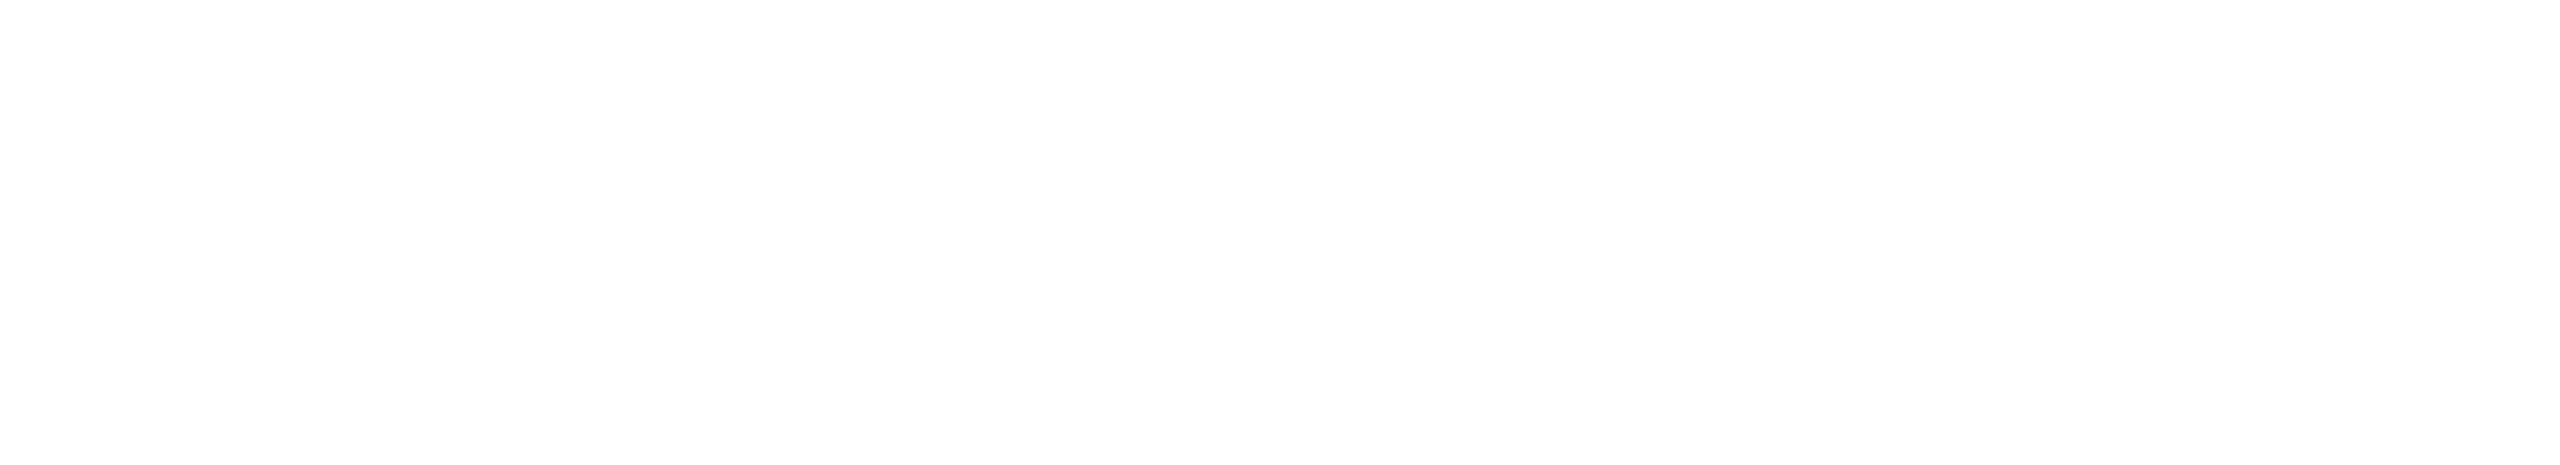 2560px-Zimmer_Biomet_logo_white